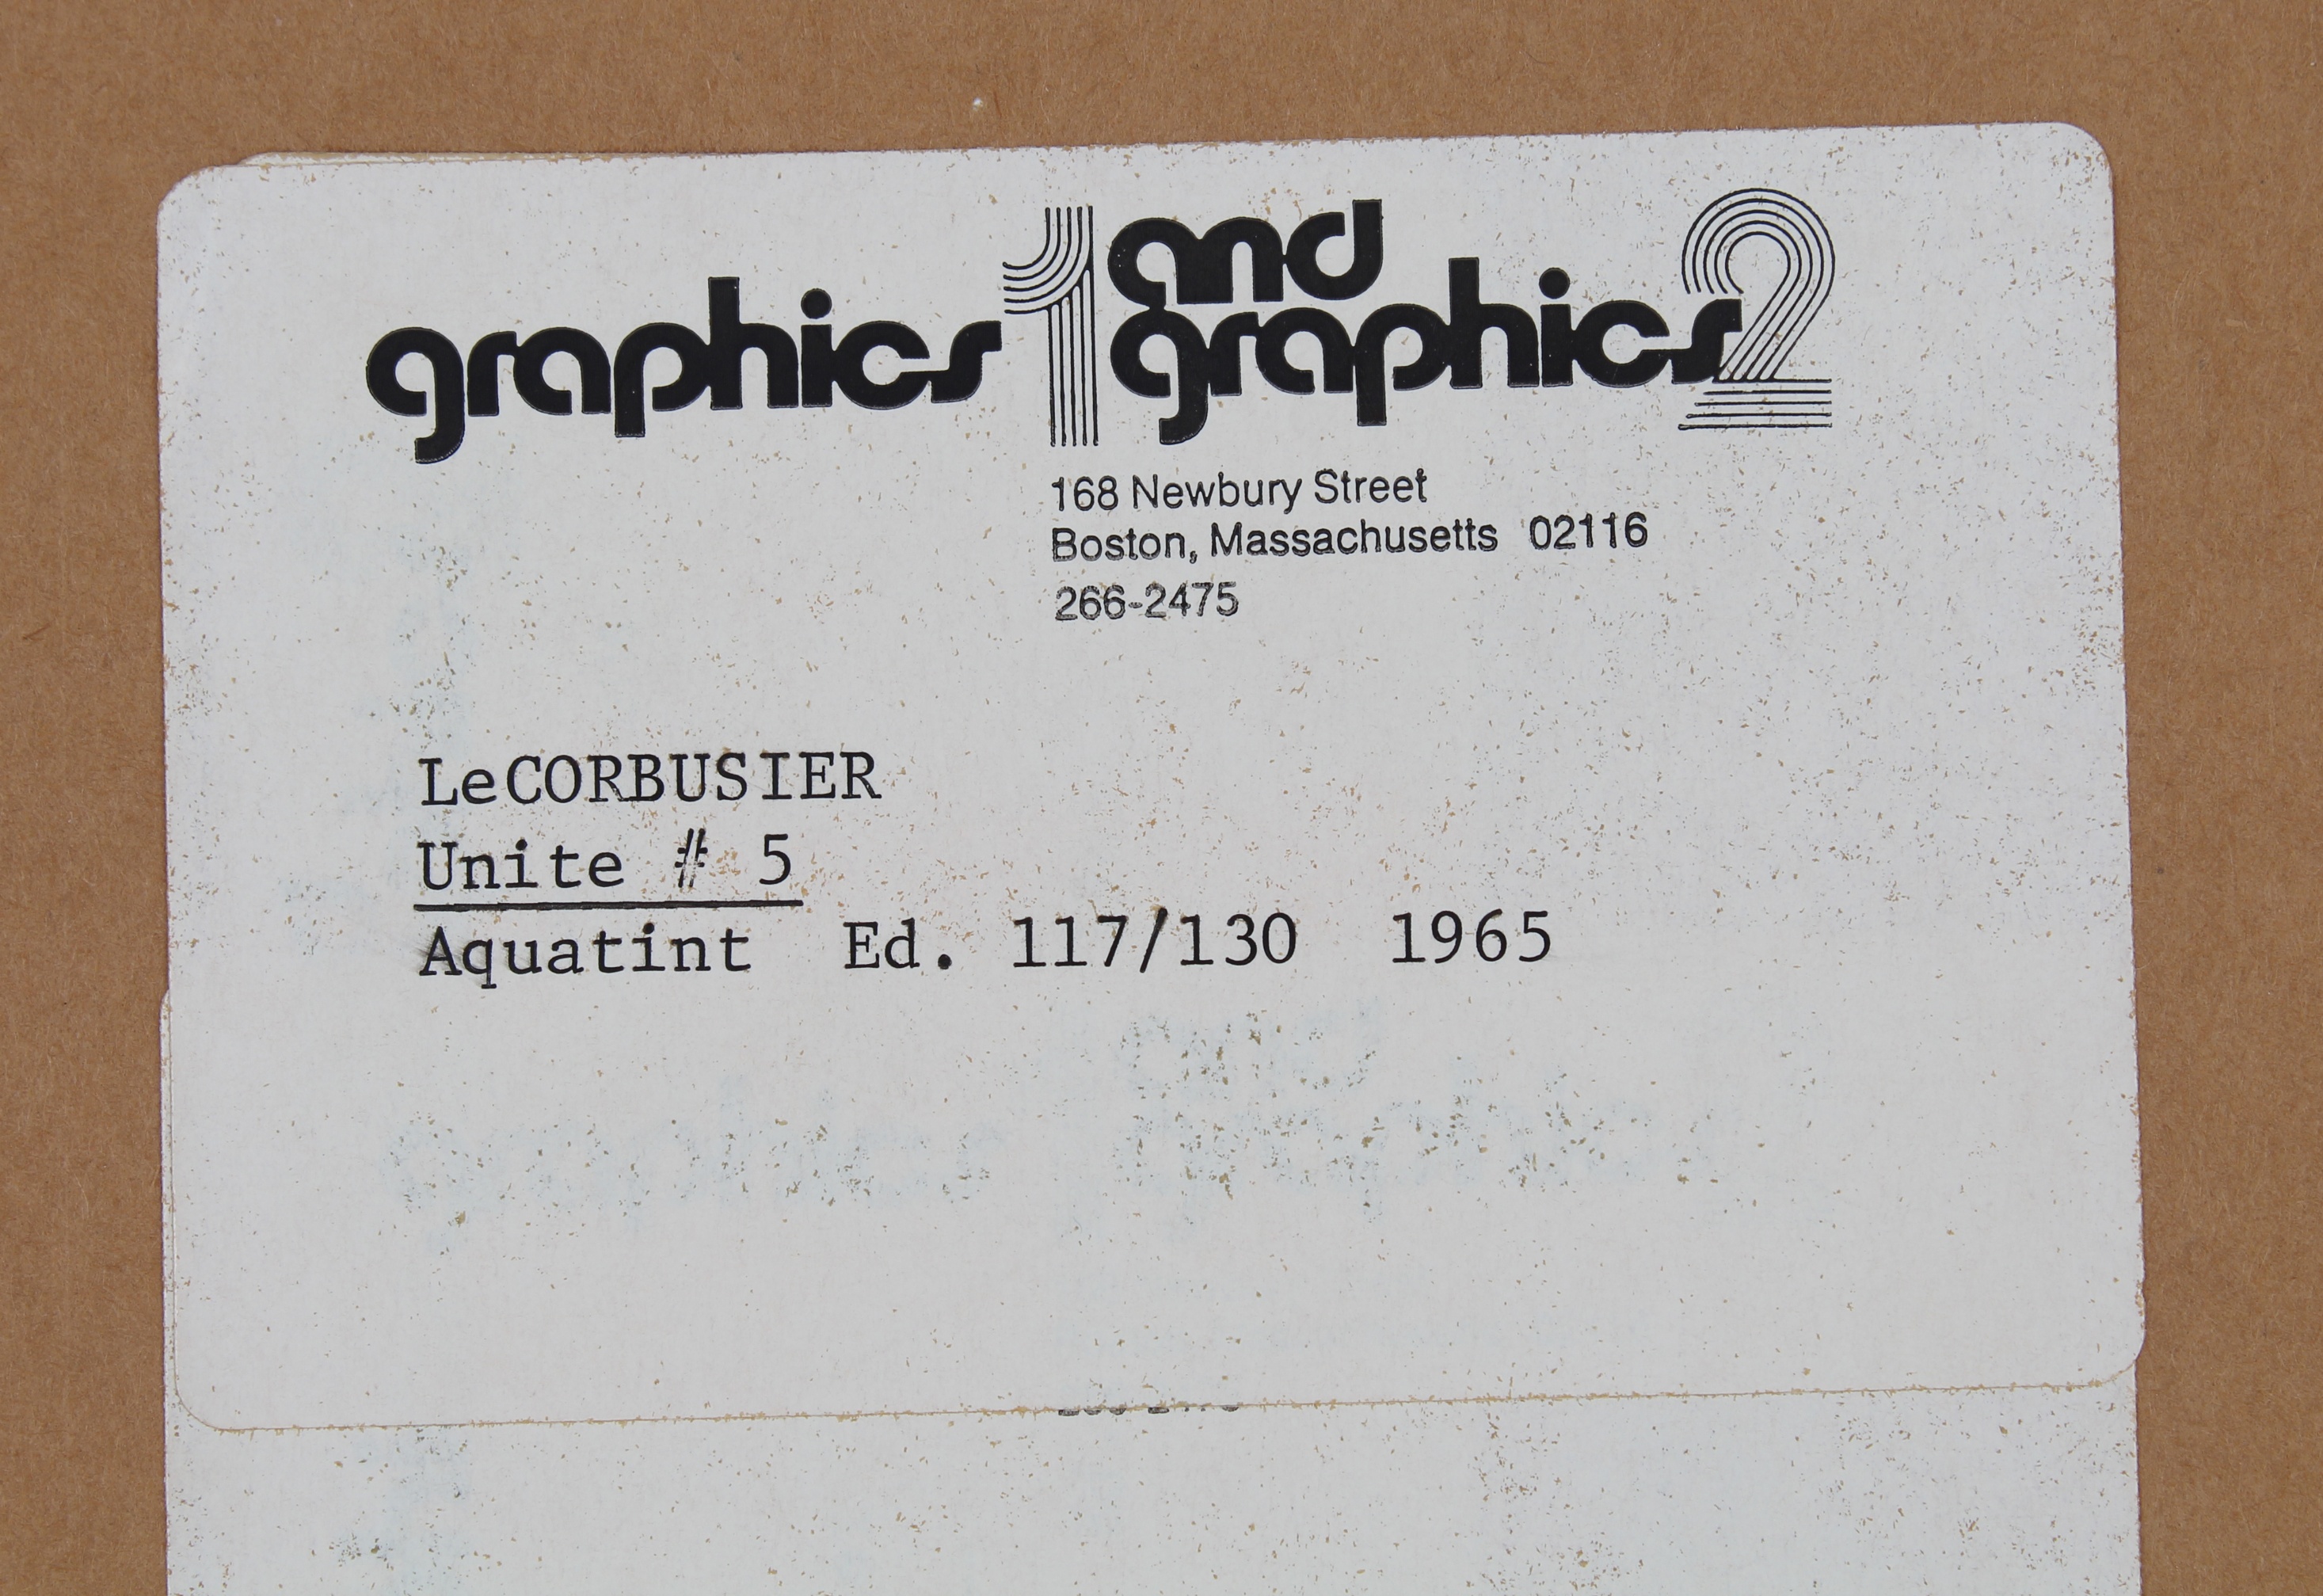 Le Corbusier "Unite, Plate n5" Aquatint Etching - Image 8 of 8